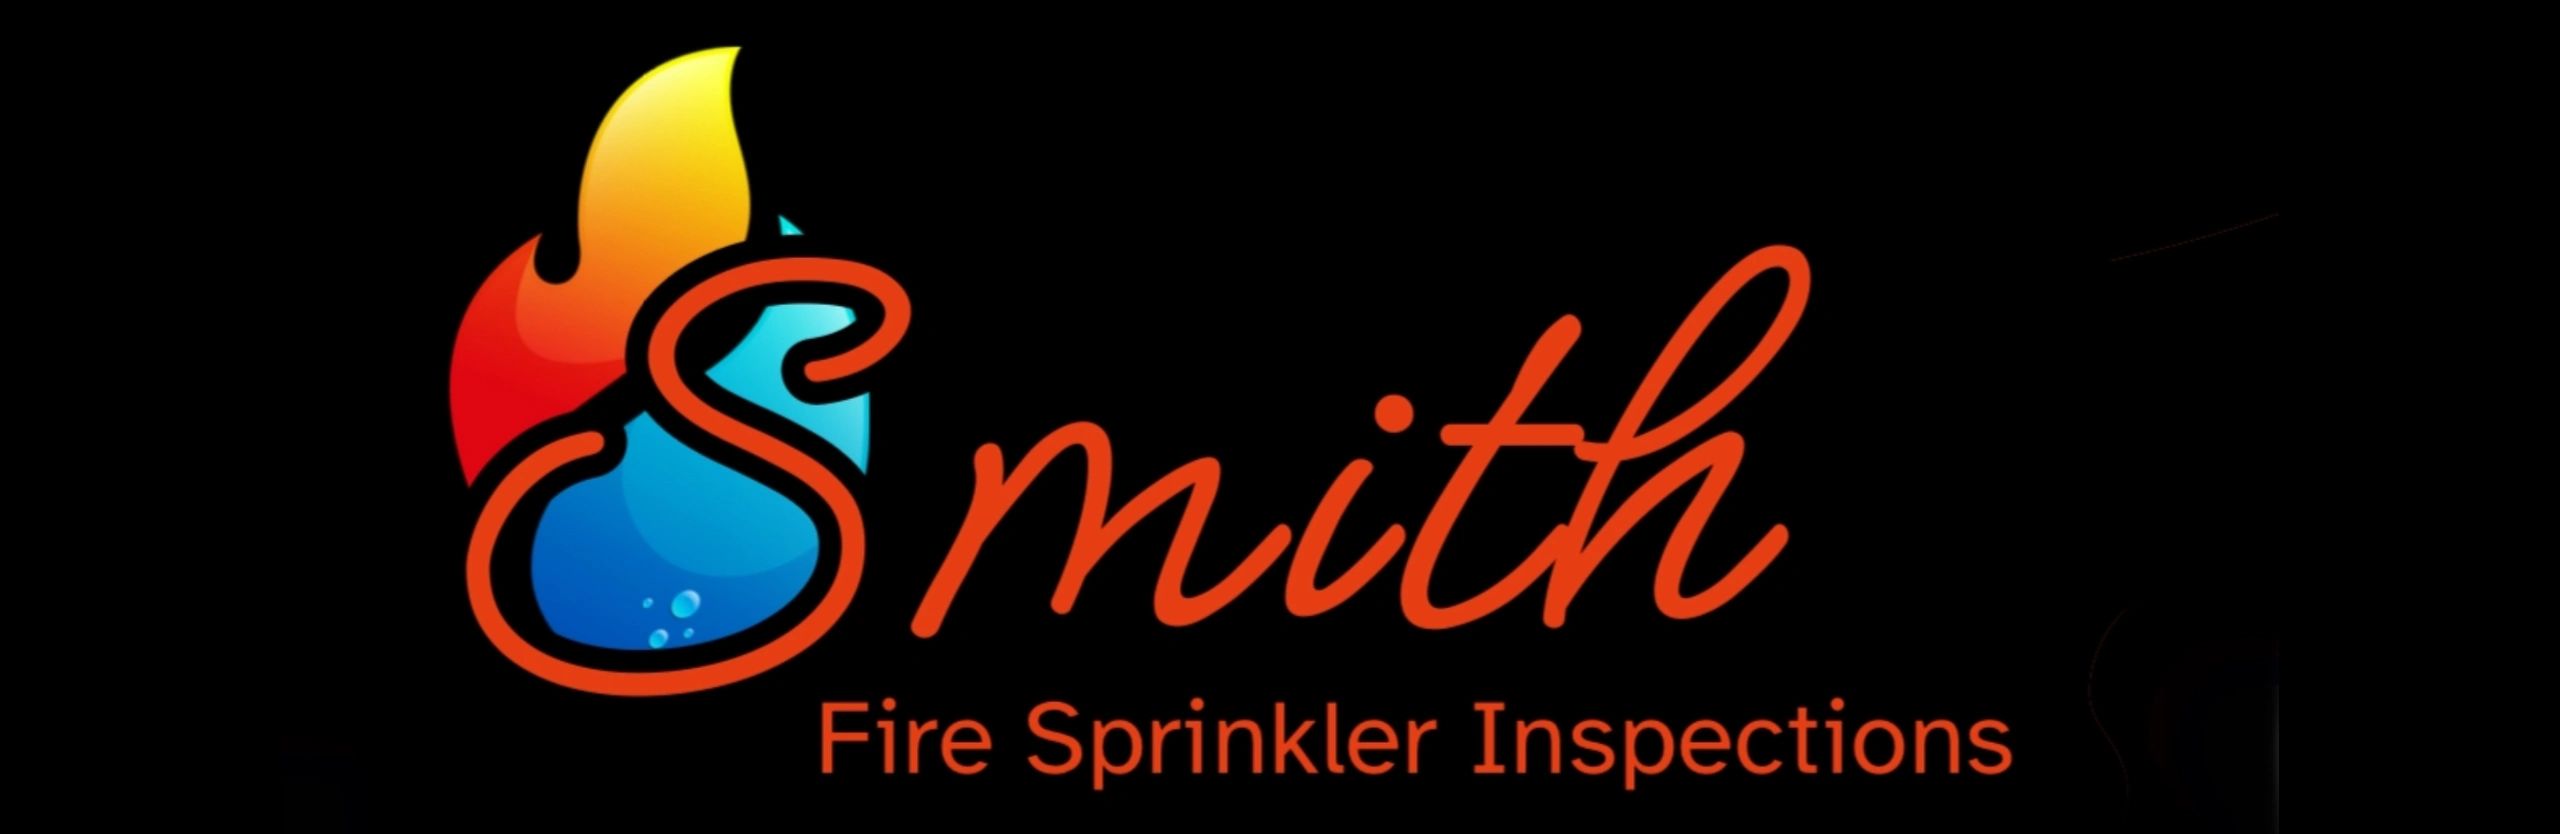 Smith Fire Sprinkler Inspections